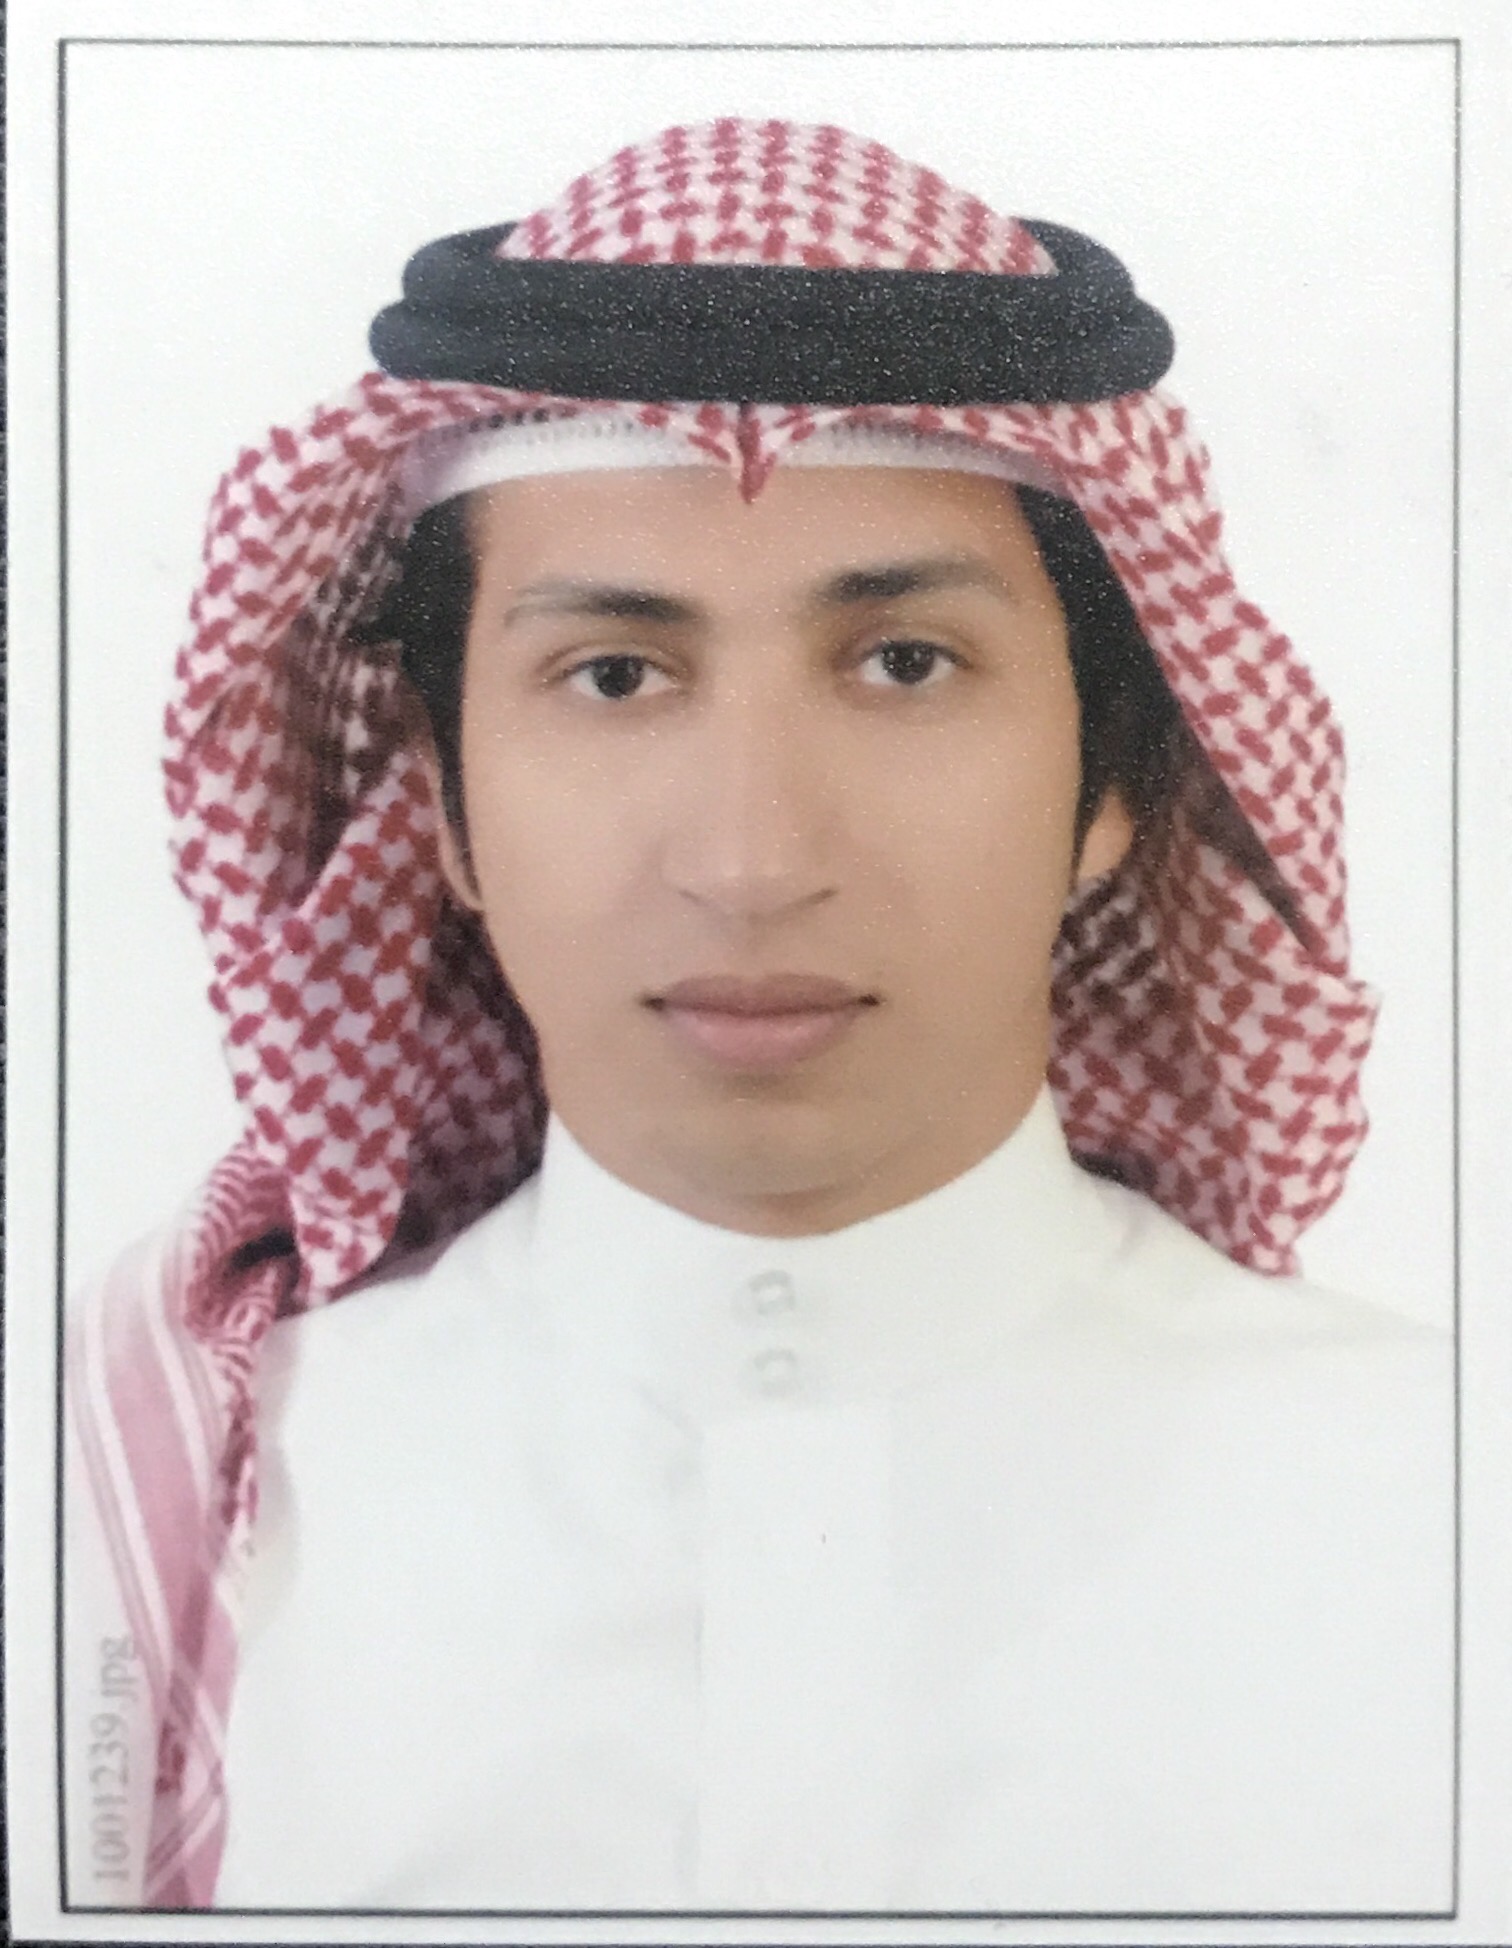 student 201027180 محمد بن ابراهيم بن عمر السعود picture